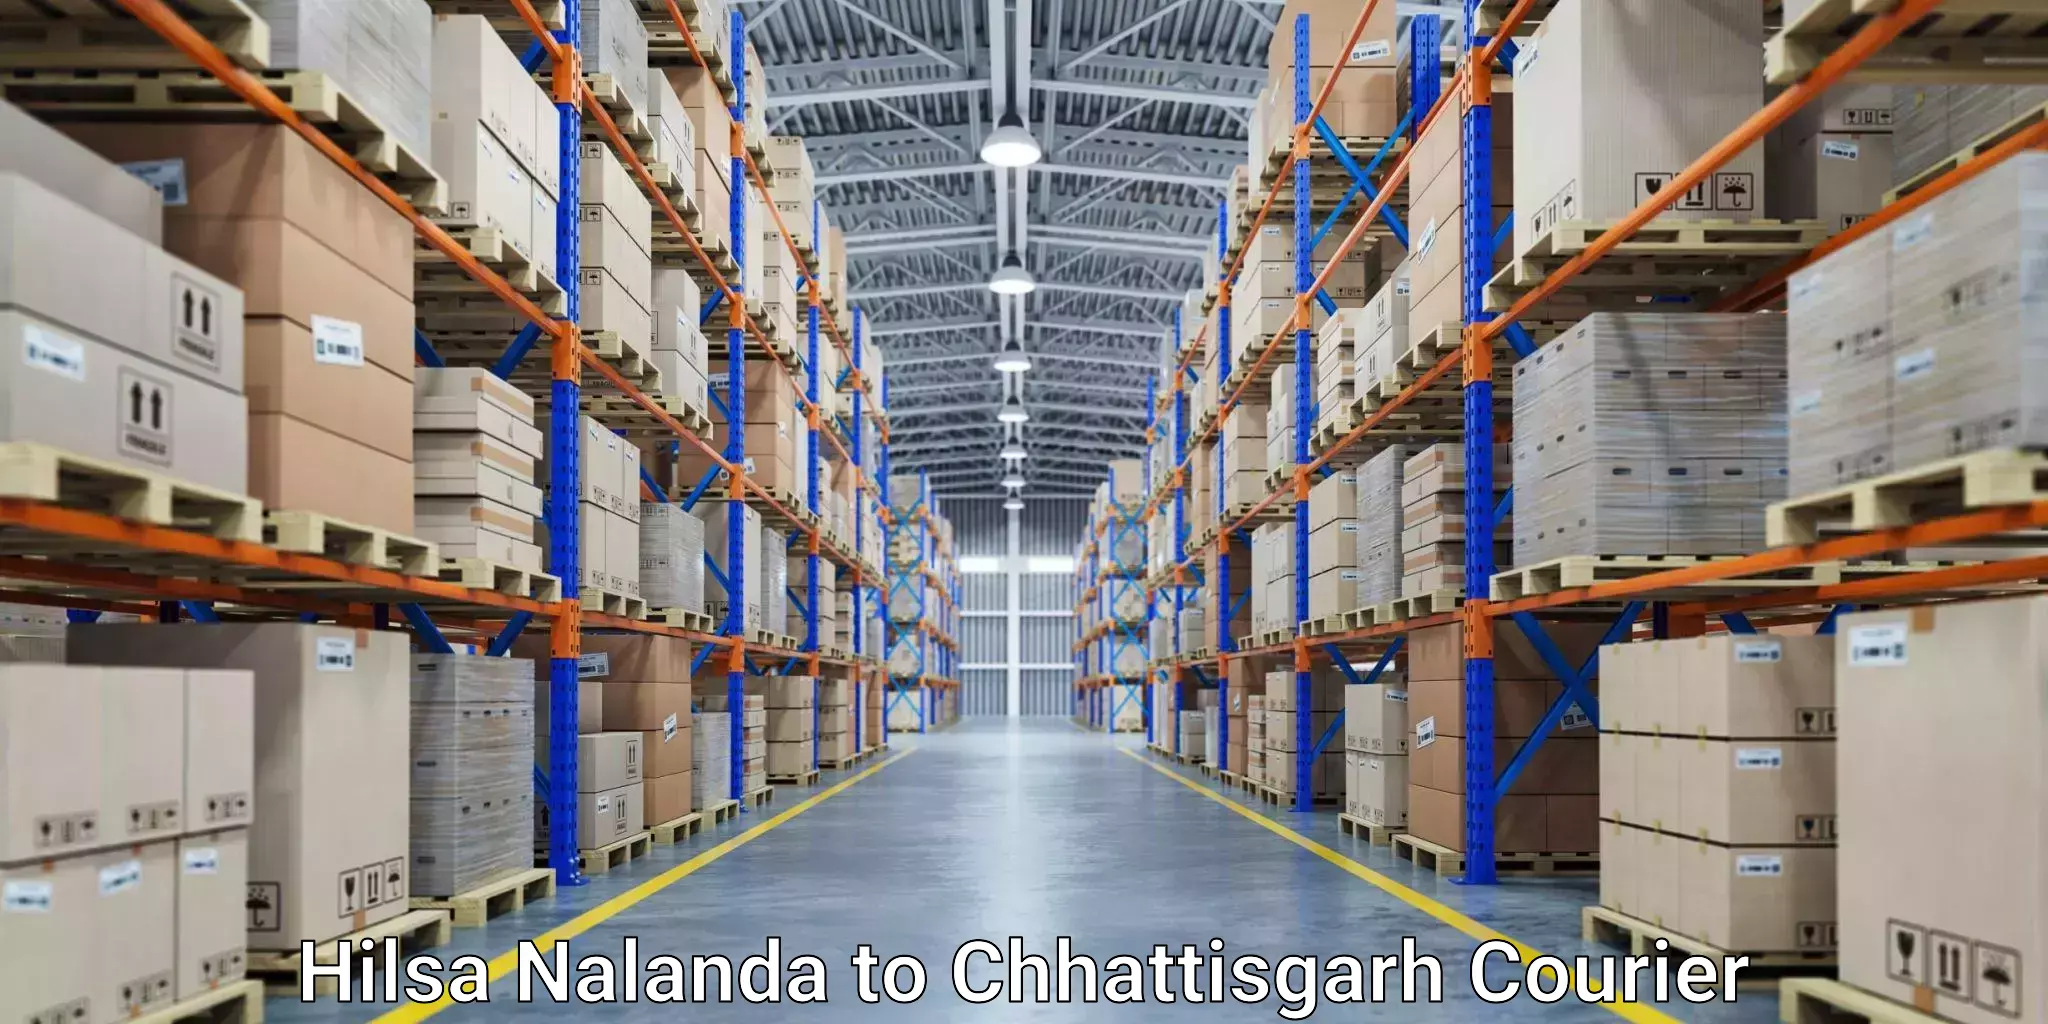 Professional courier handling Hilsa Nalanda to Chhattisgarh